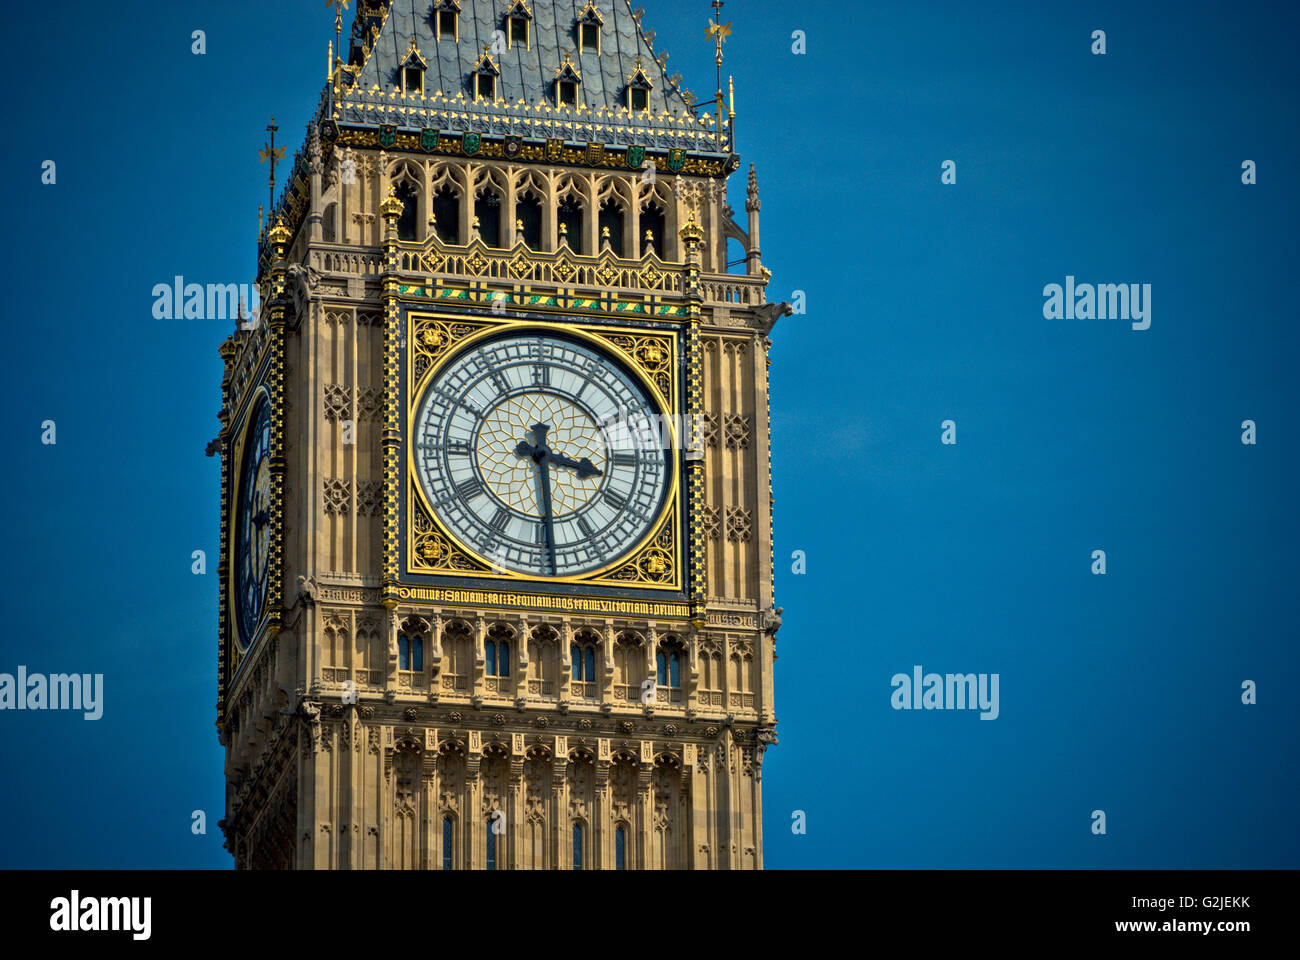 Big Ben tower clock, London, UK Stock Photo